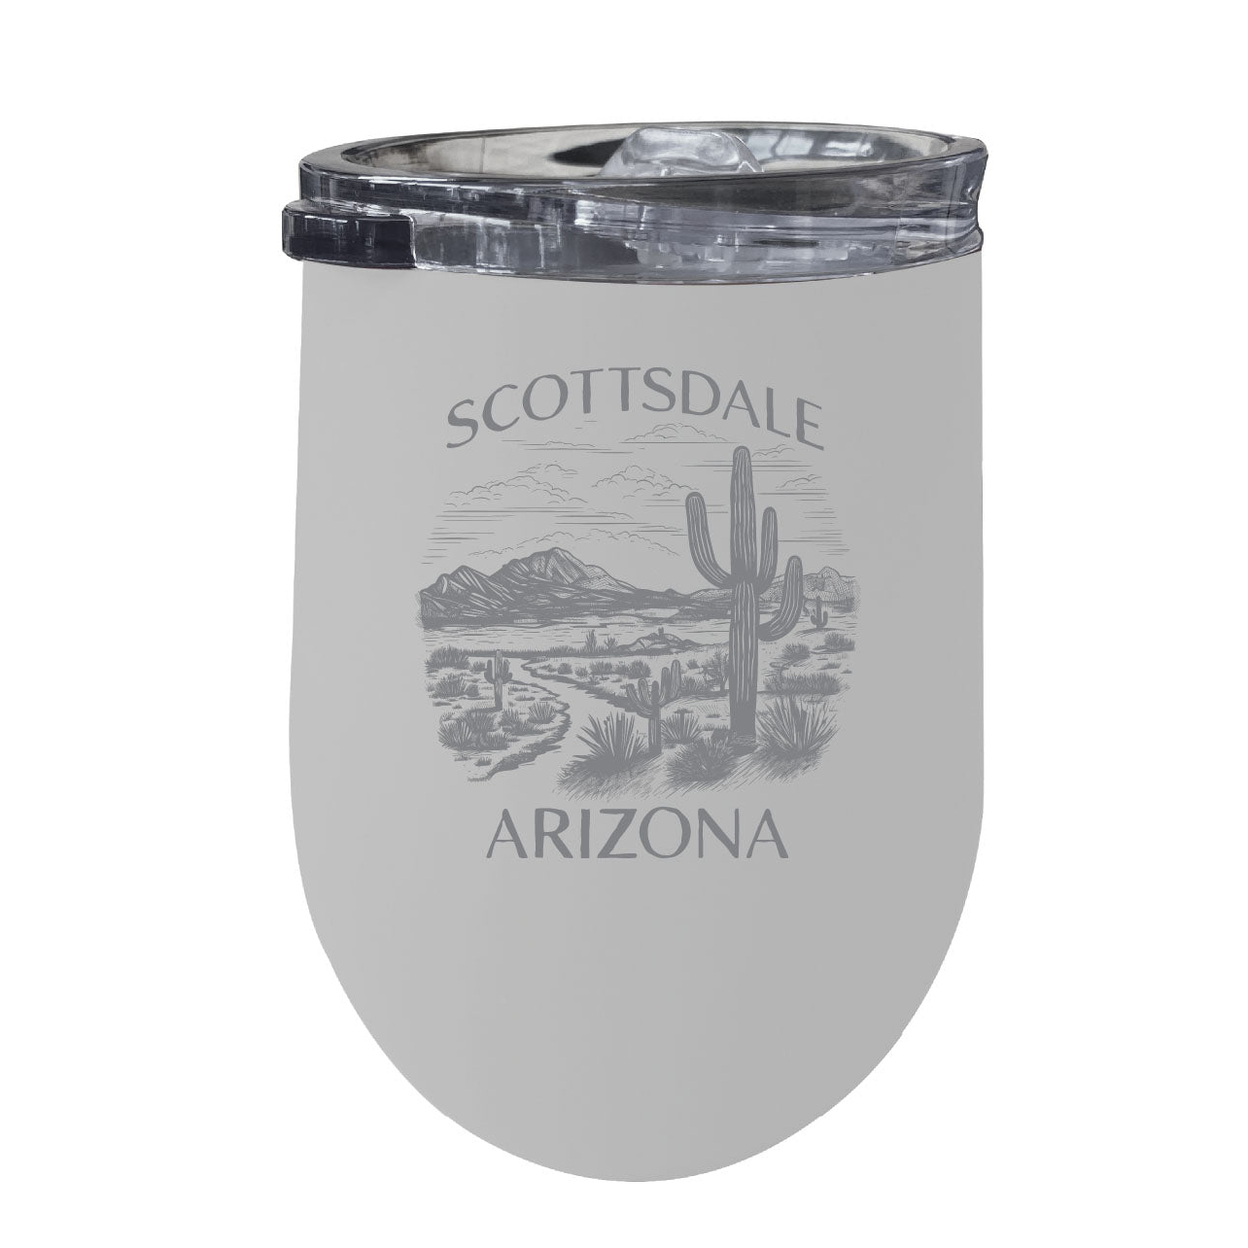 Scottsdale Arizona Souvenir 12 Oz Engraved Insulated Wine Stainless Steel Tumbler - White,,Single Unit